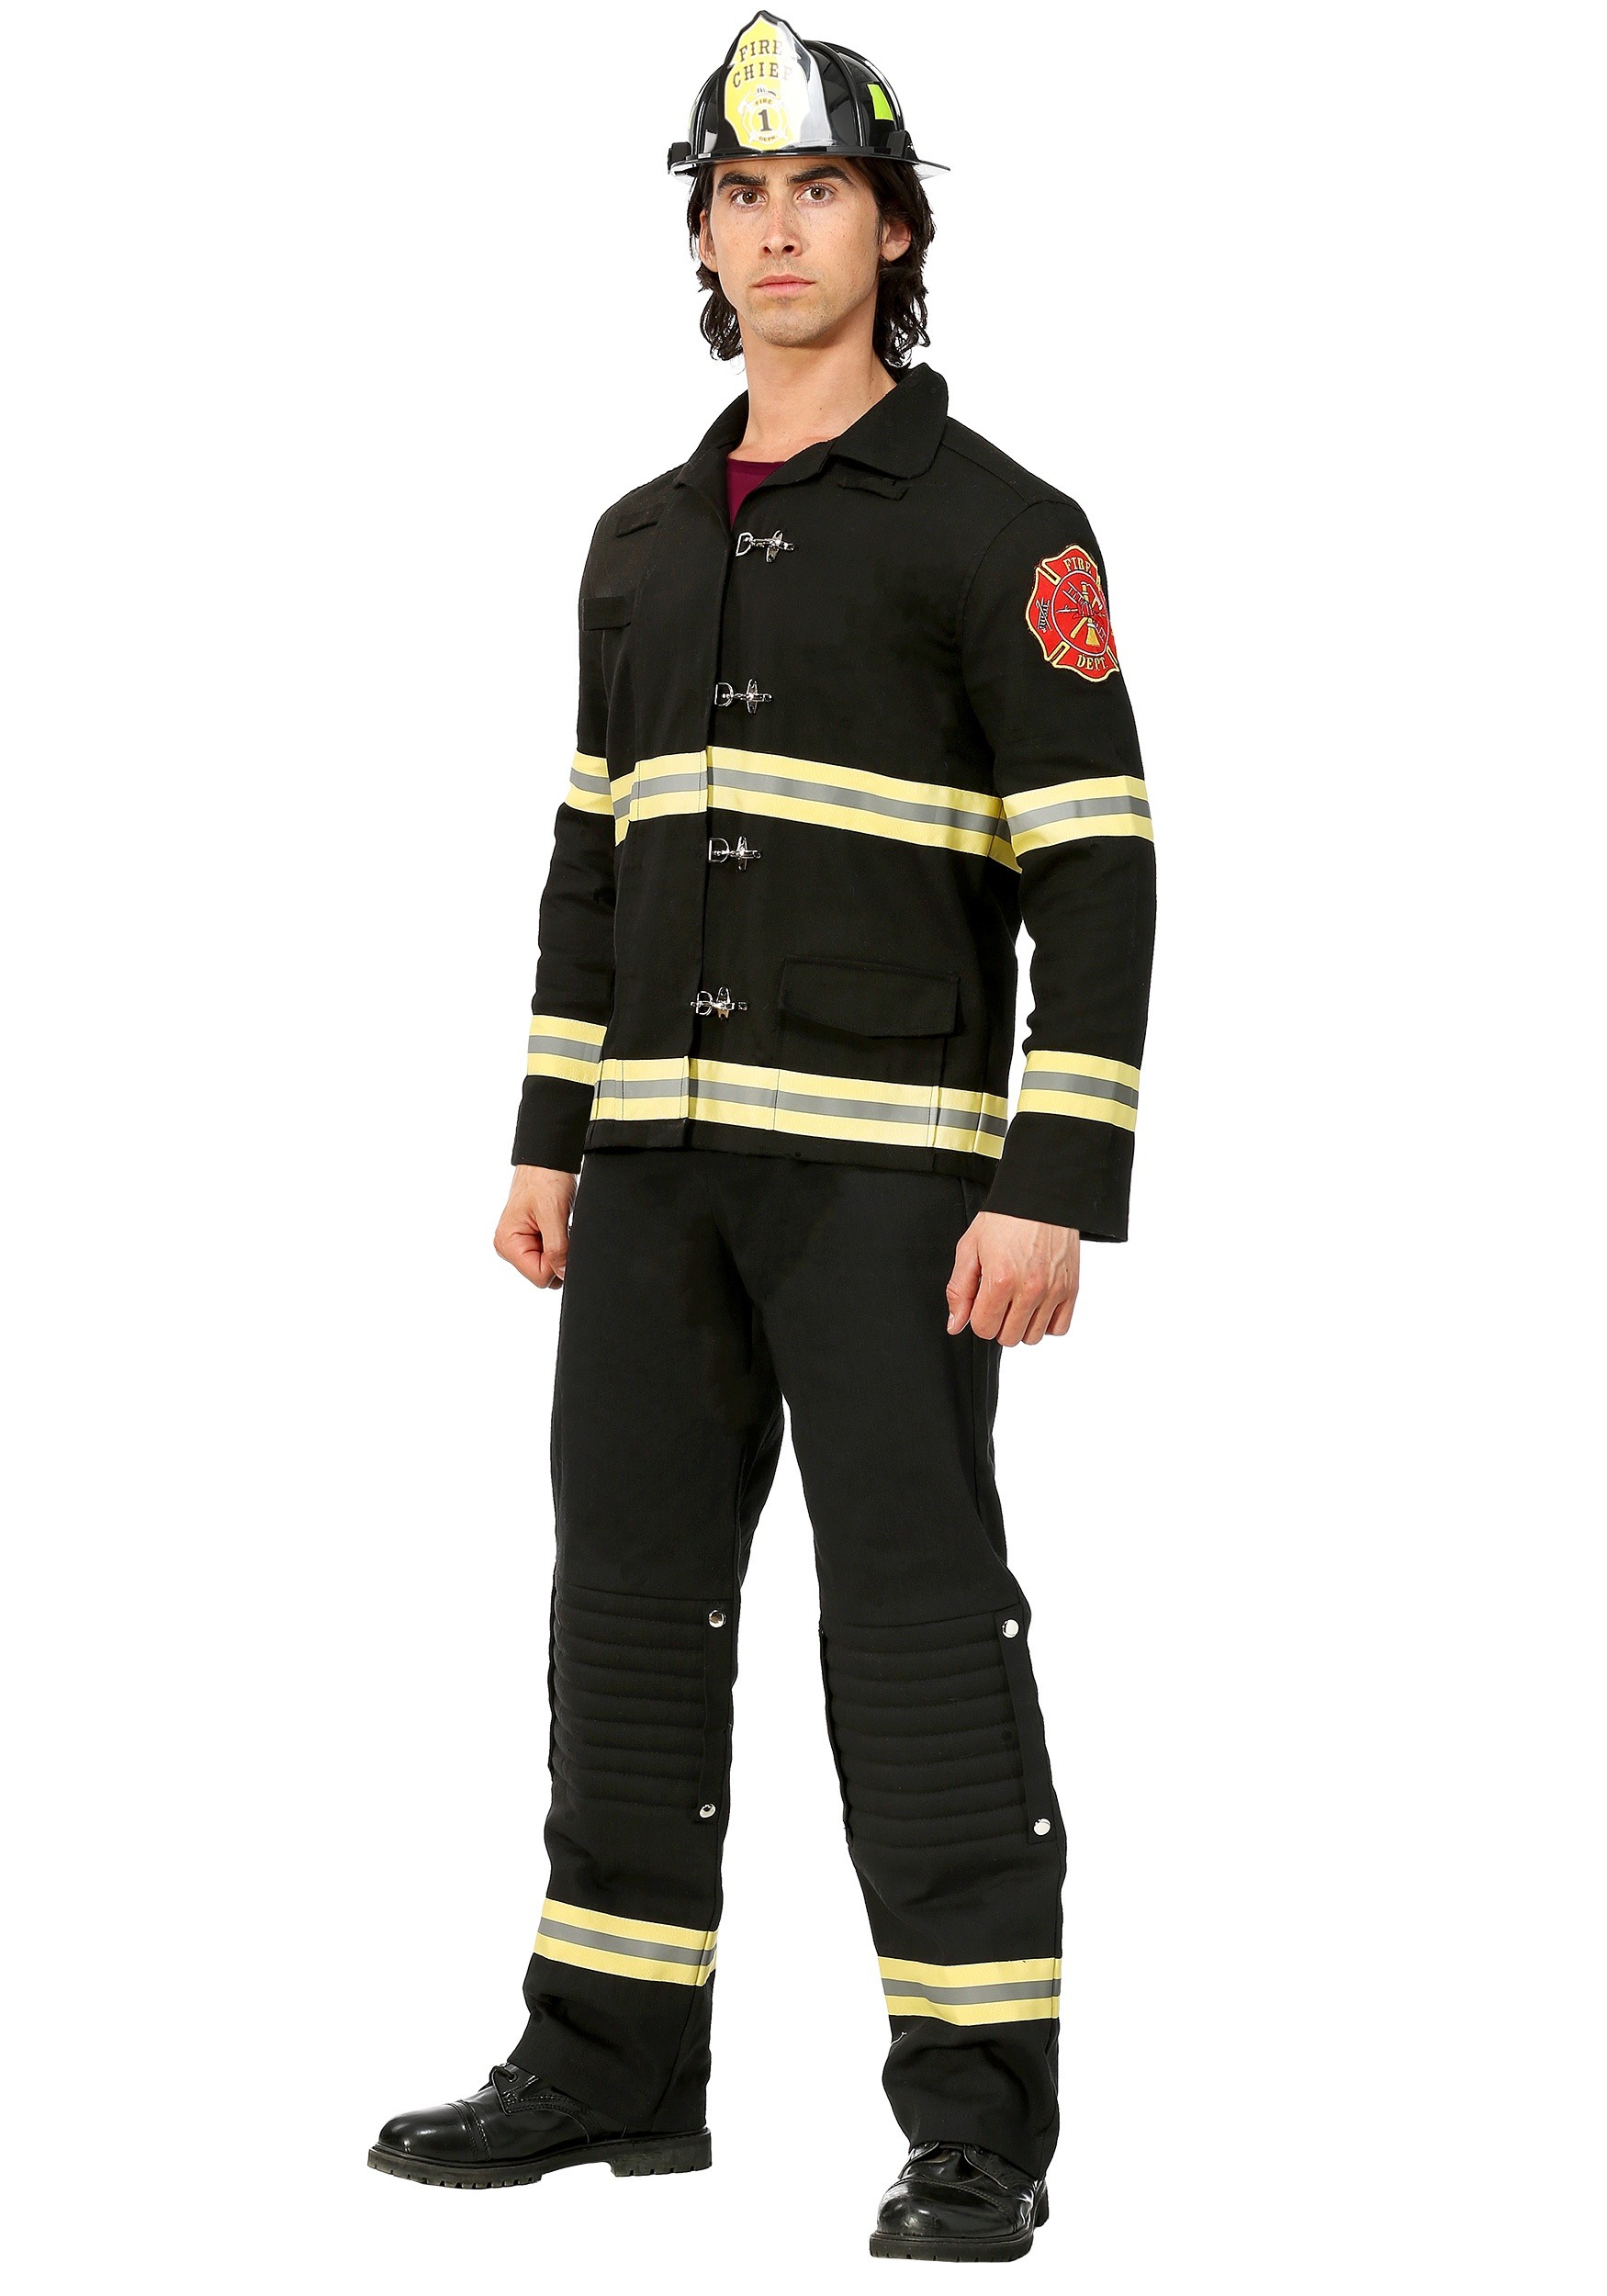 Black Uniform Firefighter Fancy Dress Costume For Men